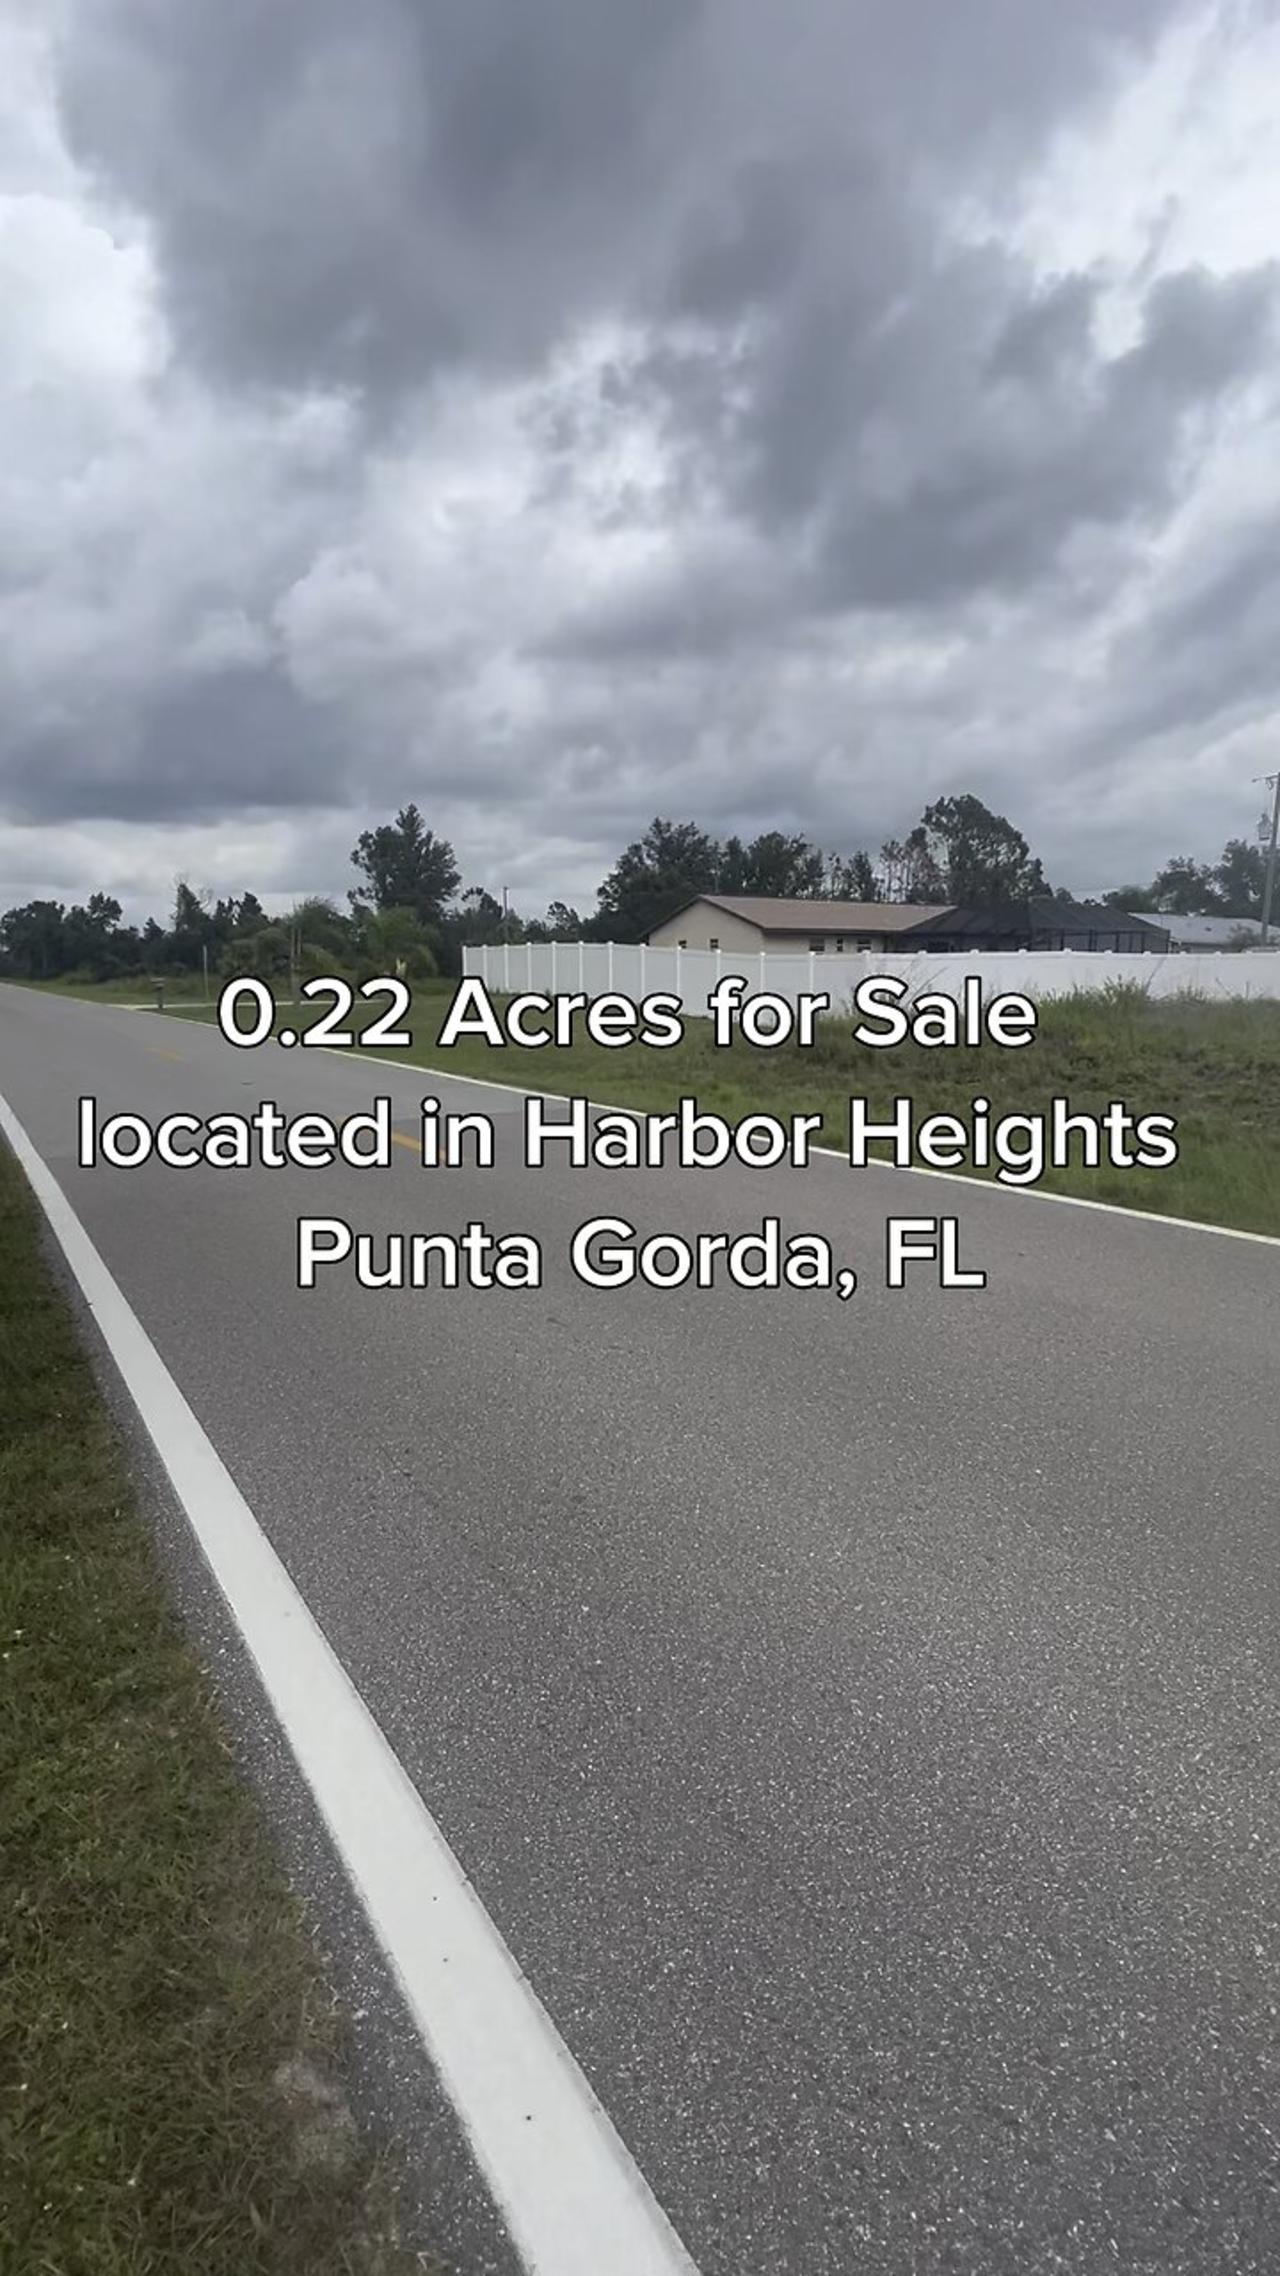 0.22 Acres for Sale in Punta Gorda, FL for $17,500